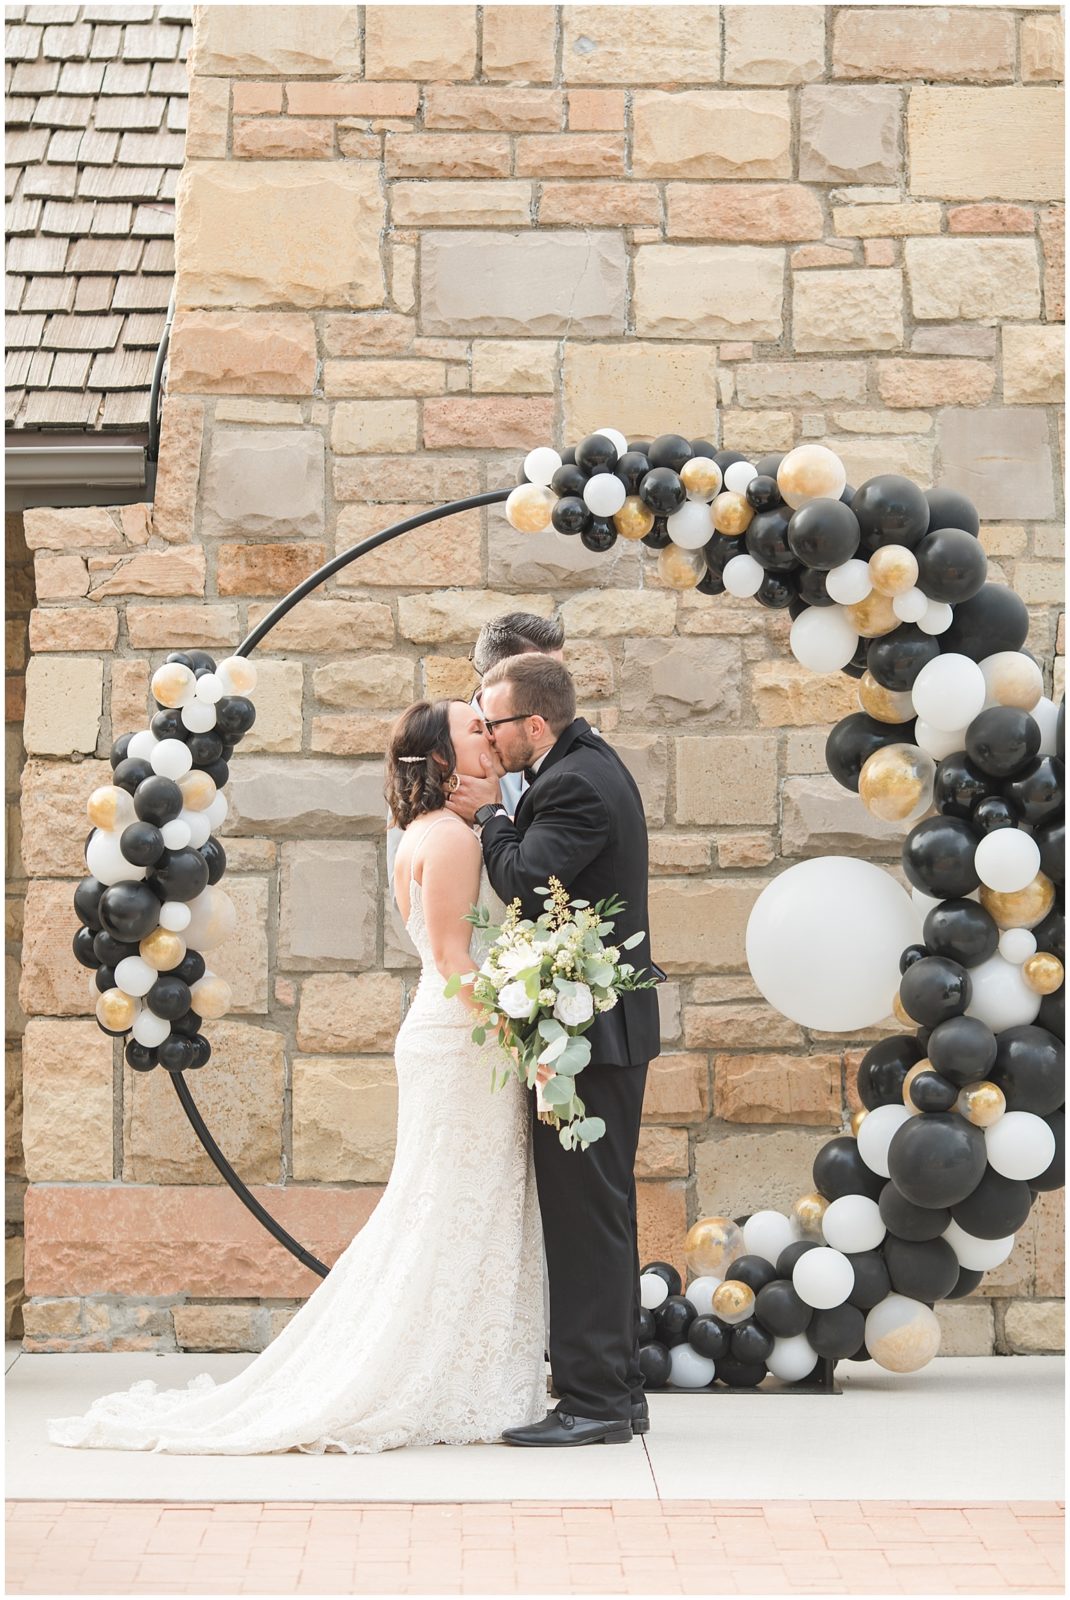 Ceremony | Wedding in LeMars, Iowa shot by Jessica Brees Photography | LeMars Wedding Photographer